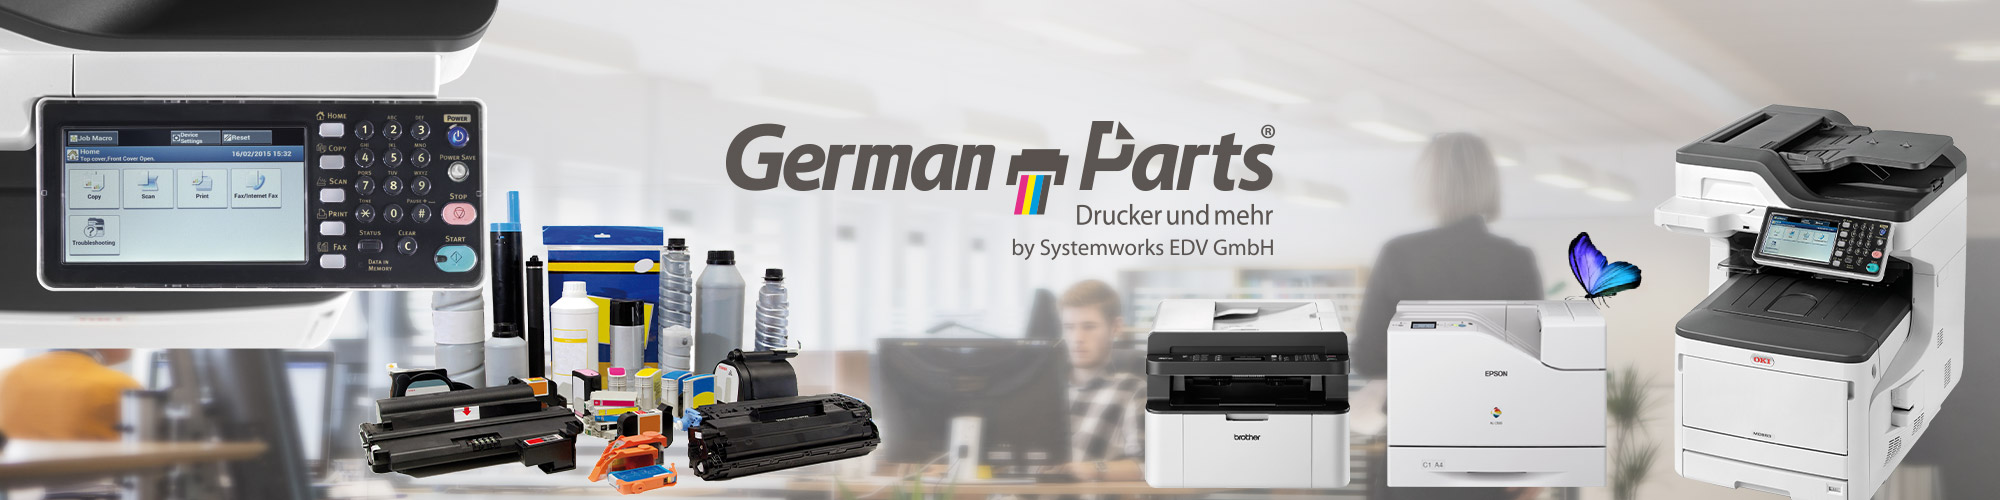 GermanParts by  Systemworks EDV GmbH